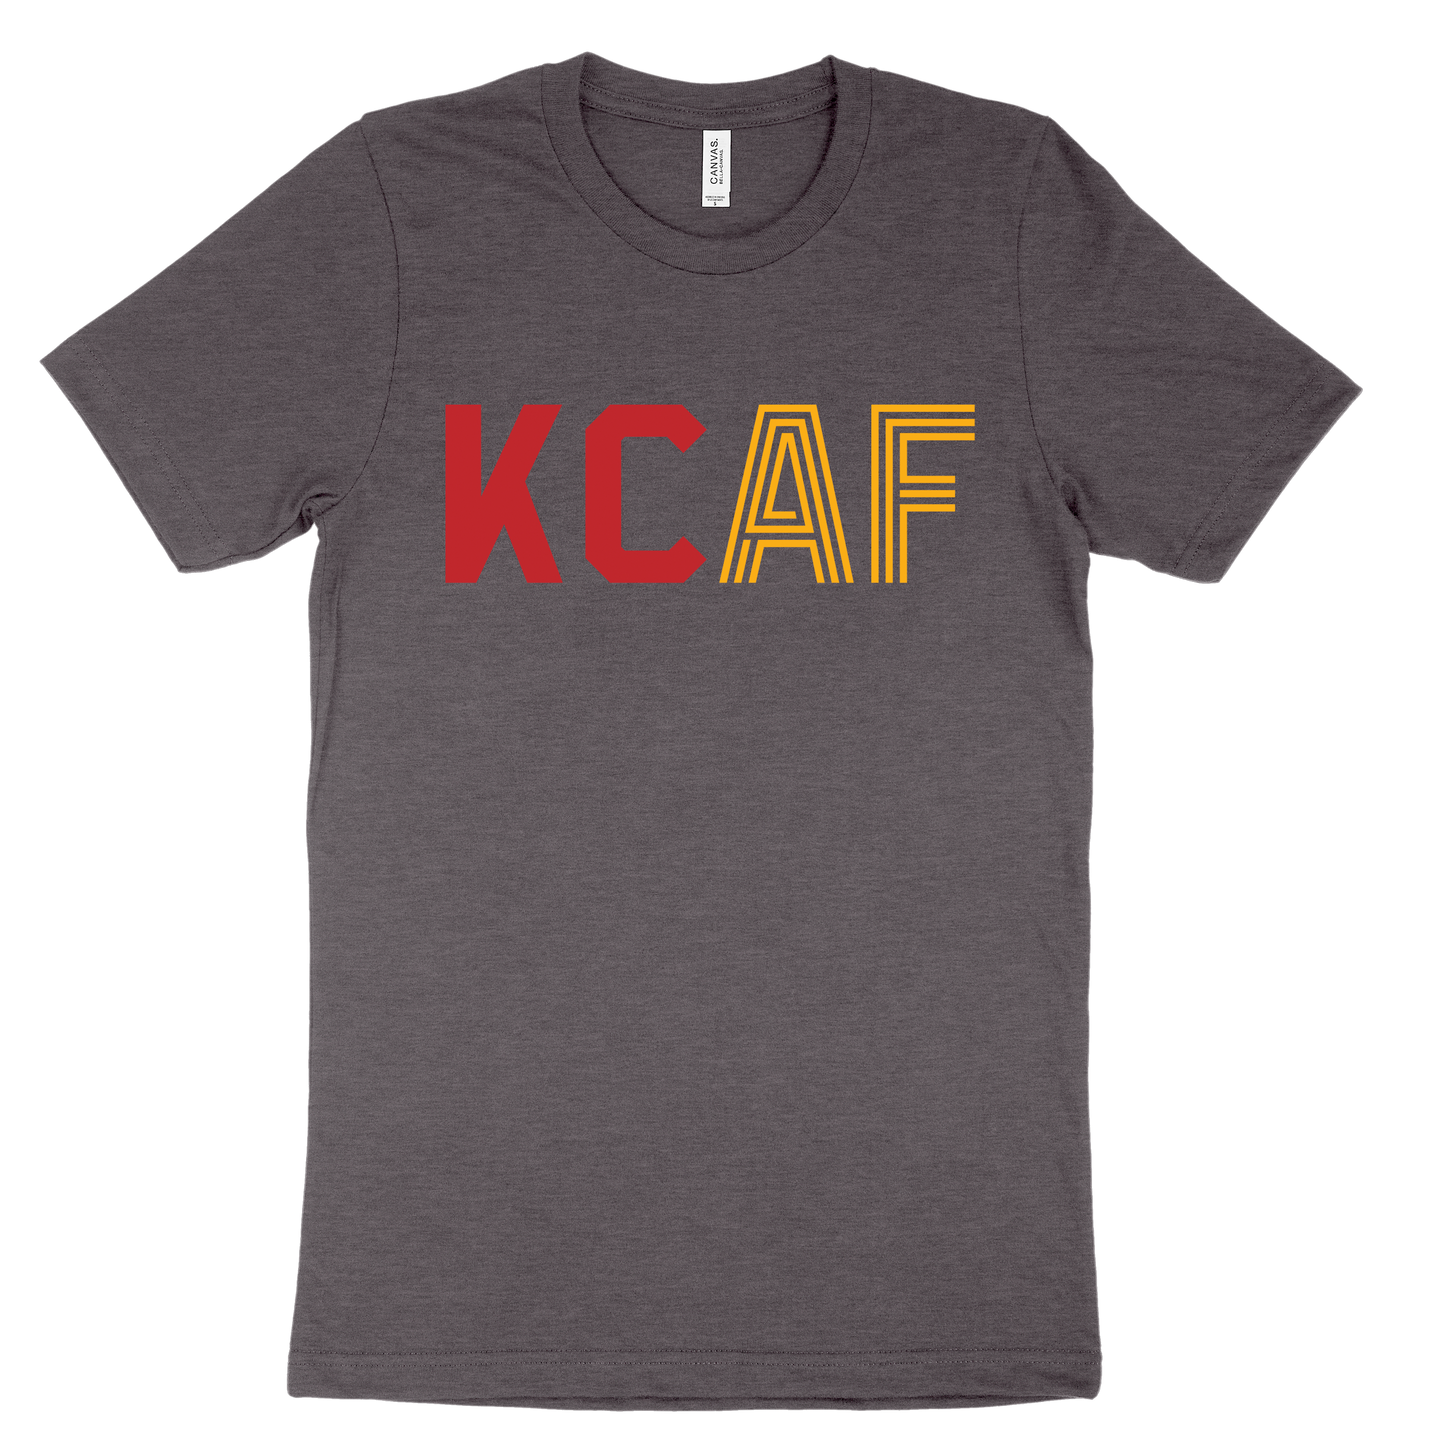 KCAF Tee - Dark Grey